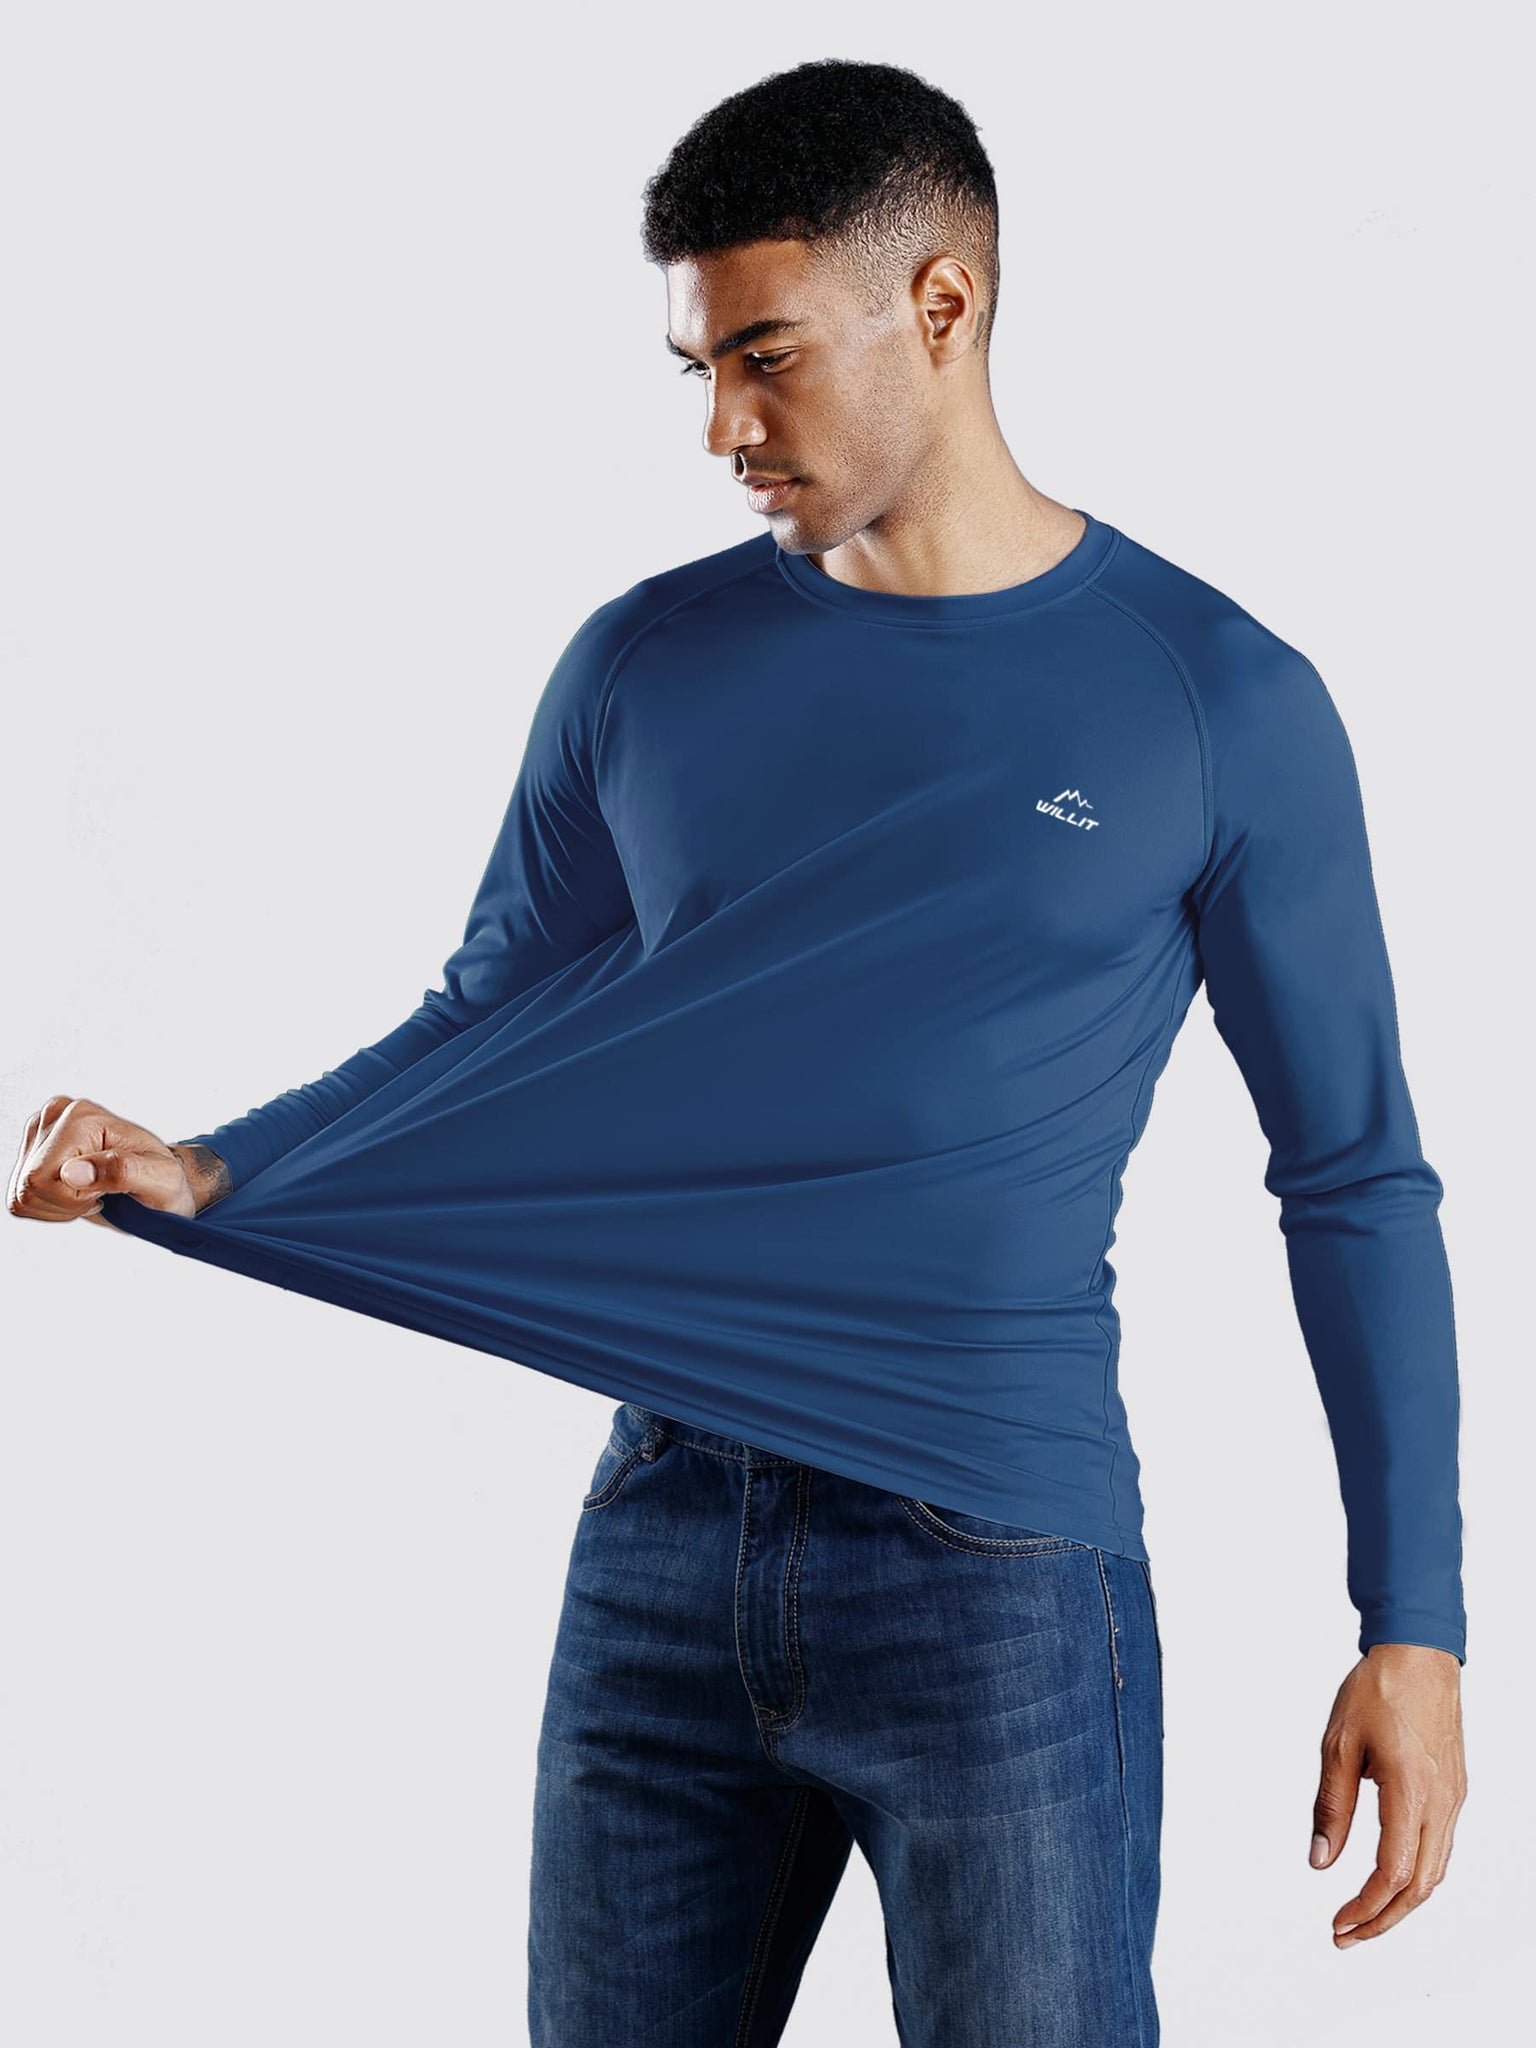 Willit Men's Sun Protection Long Sleeve Shirts_Ocean Blue_model2